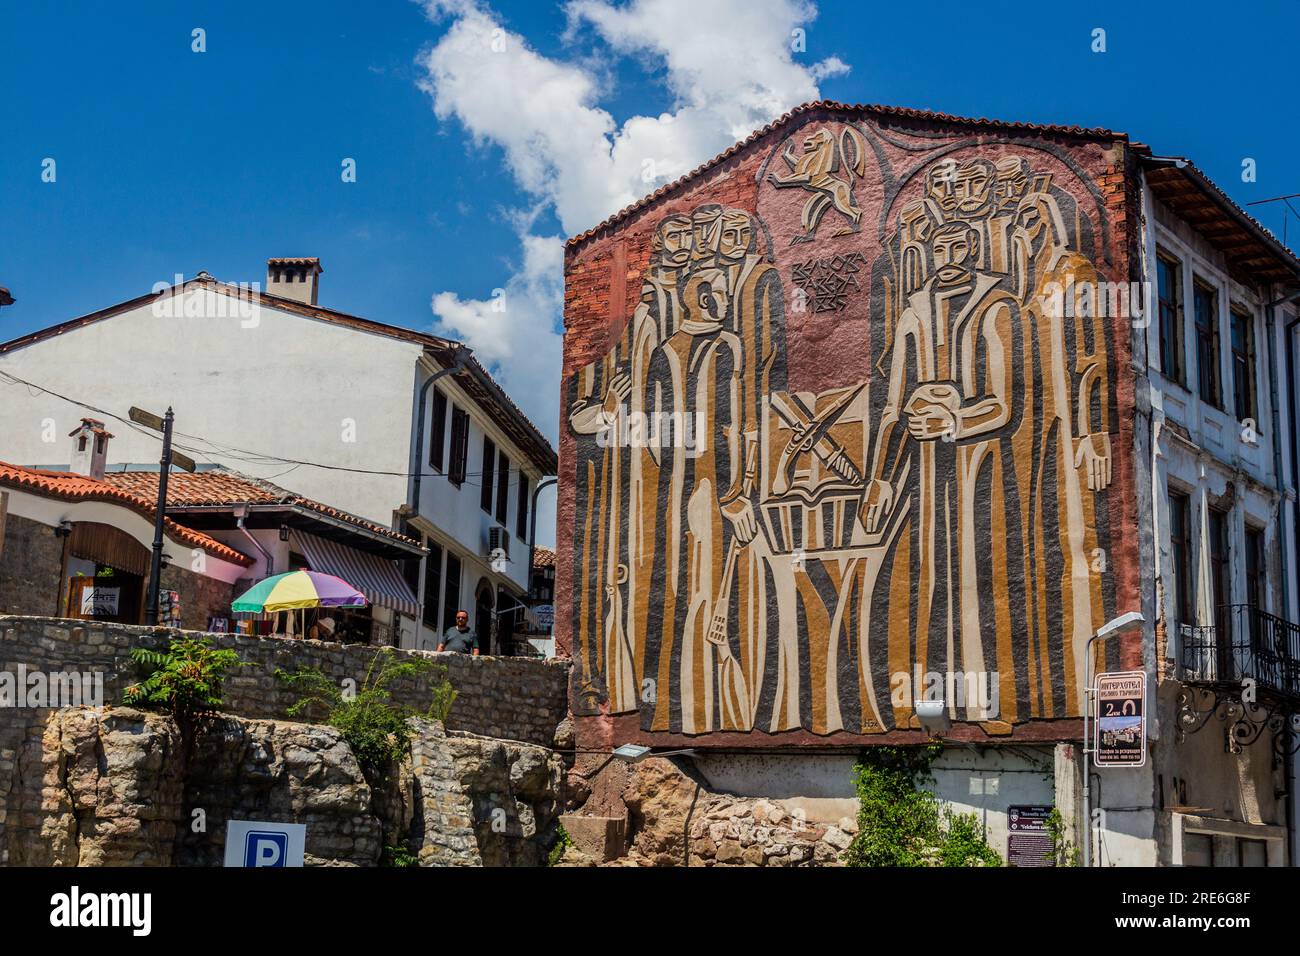 VELIKO TARNOVO, BULGARIA - JULY 26, 2019: Sgraffito on a house in Veliko Tarnovo town, Bulgaria Stock Photo